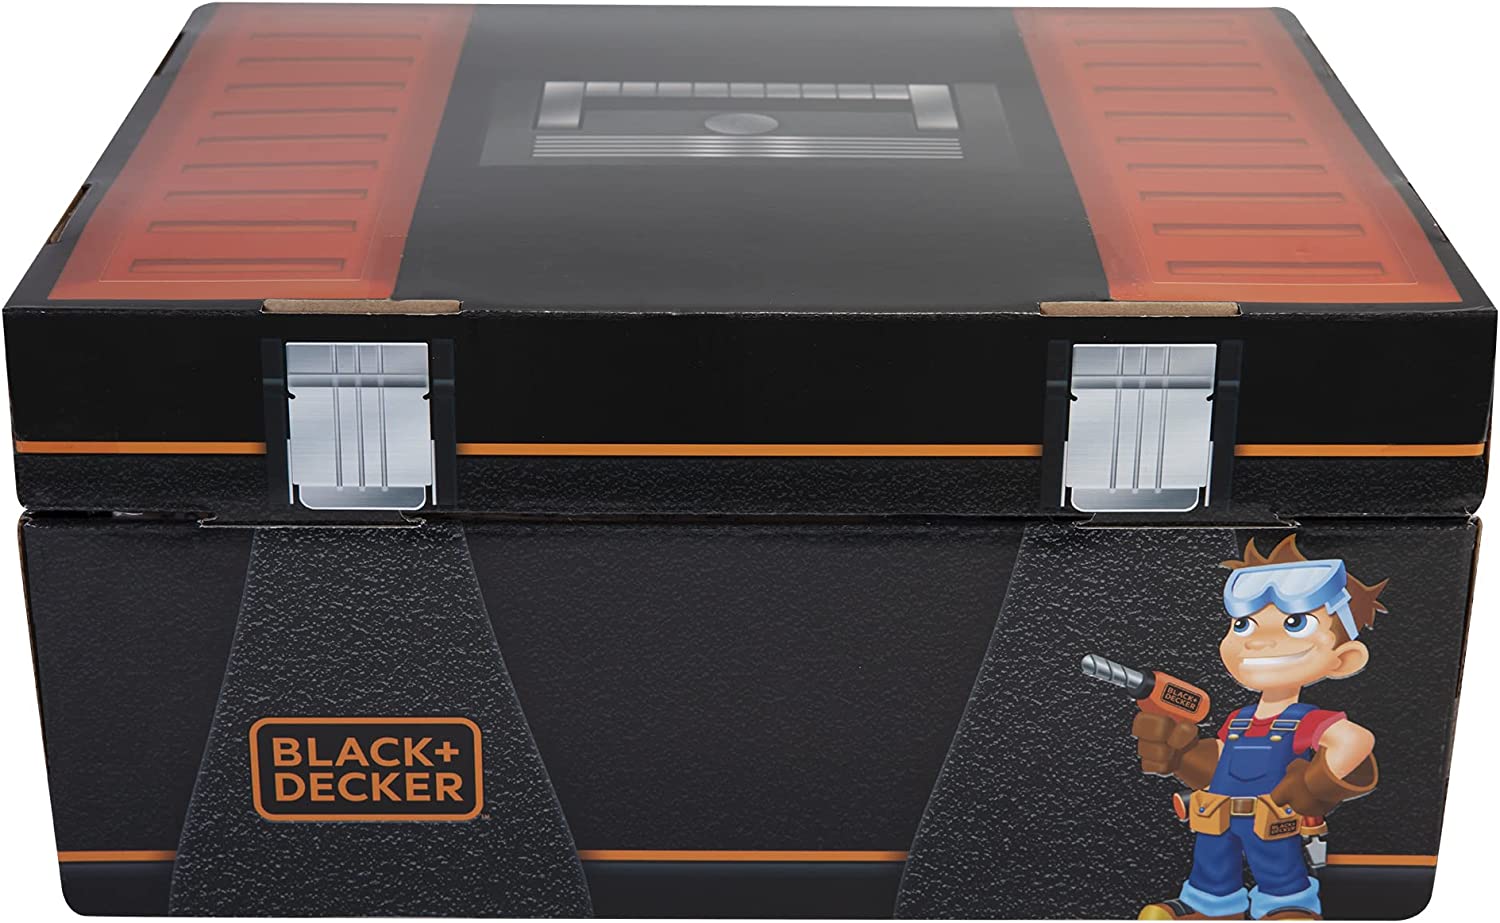  BLACK+DECKER Kids Tool Set Pretend Play Trunk with